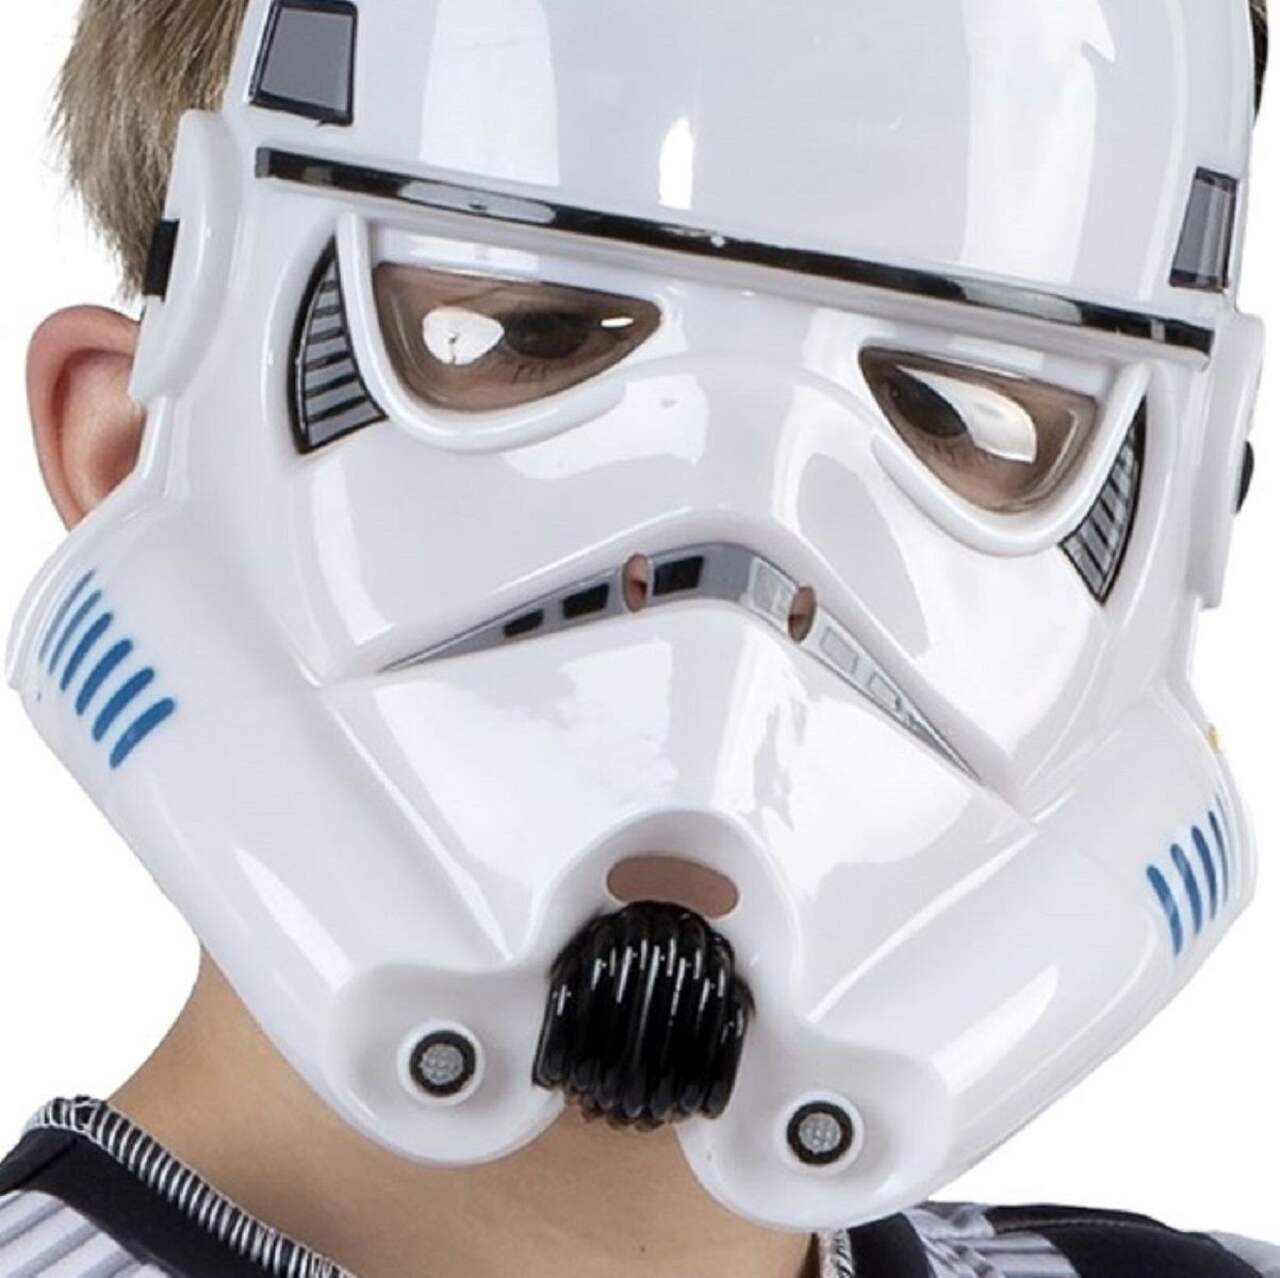 Achetez en ligne Casque Stormtrooper Star Wars enfant